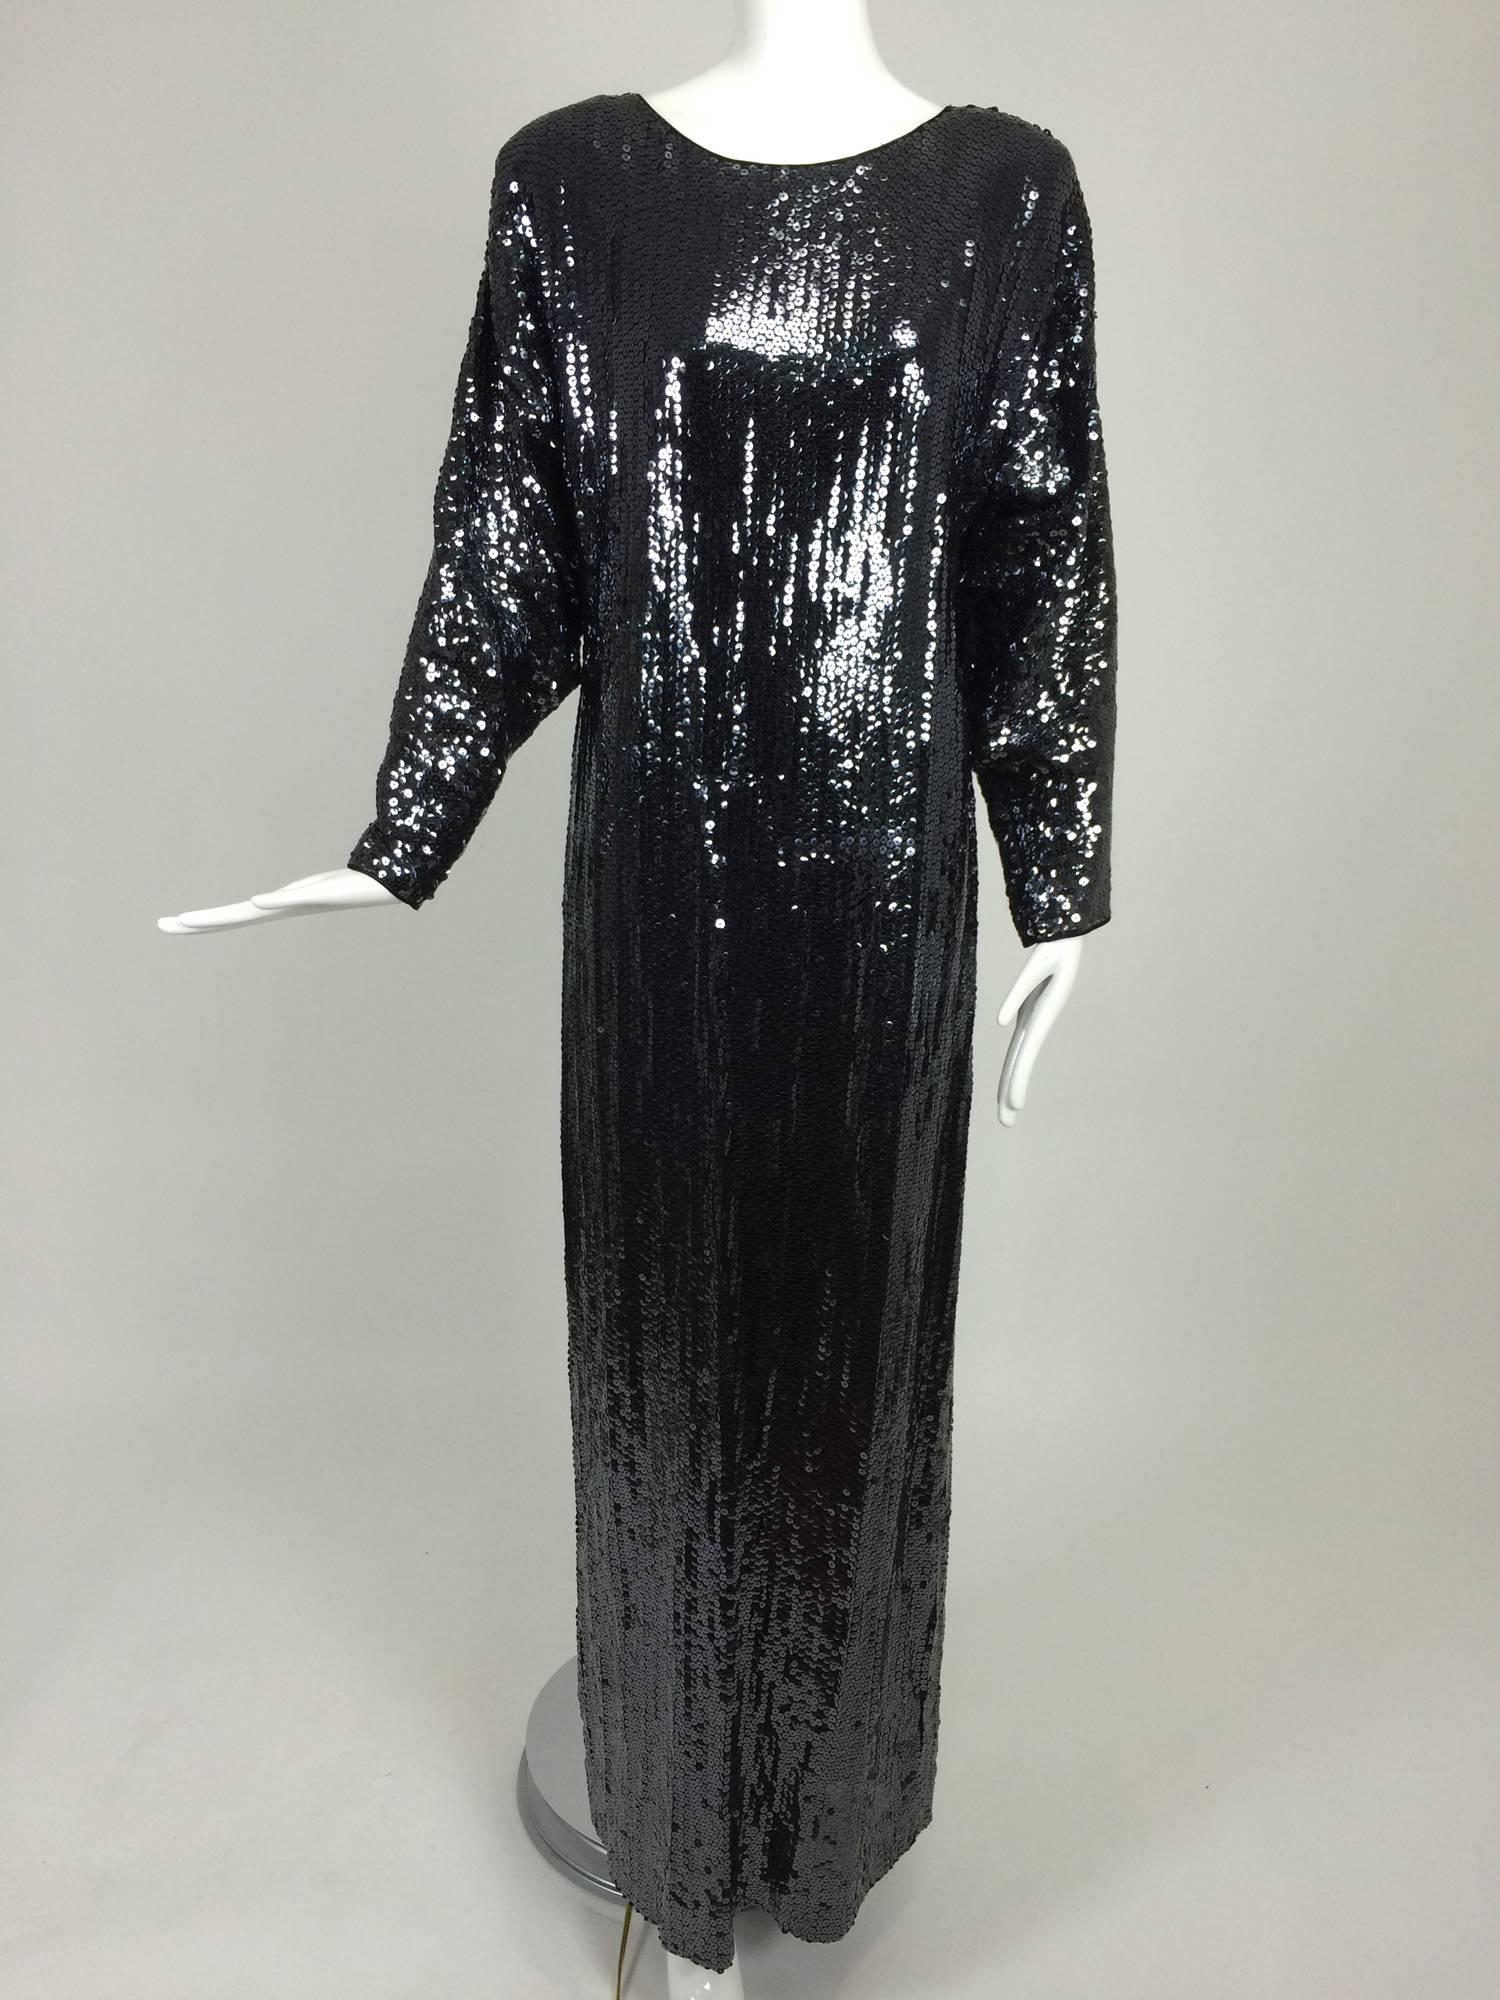 Halston glittery black sequin bat wing evening gown  2